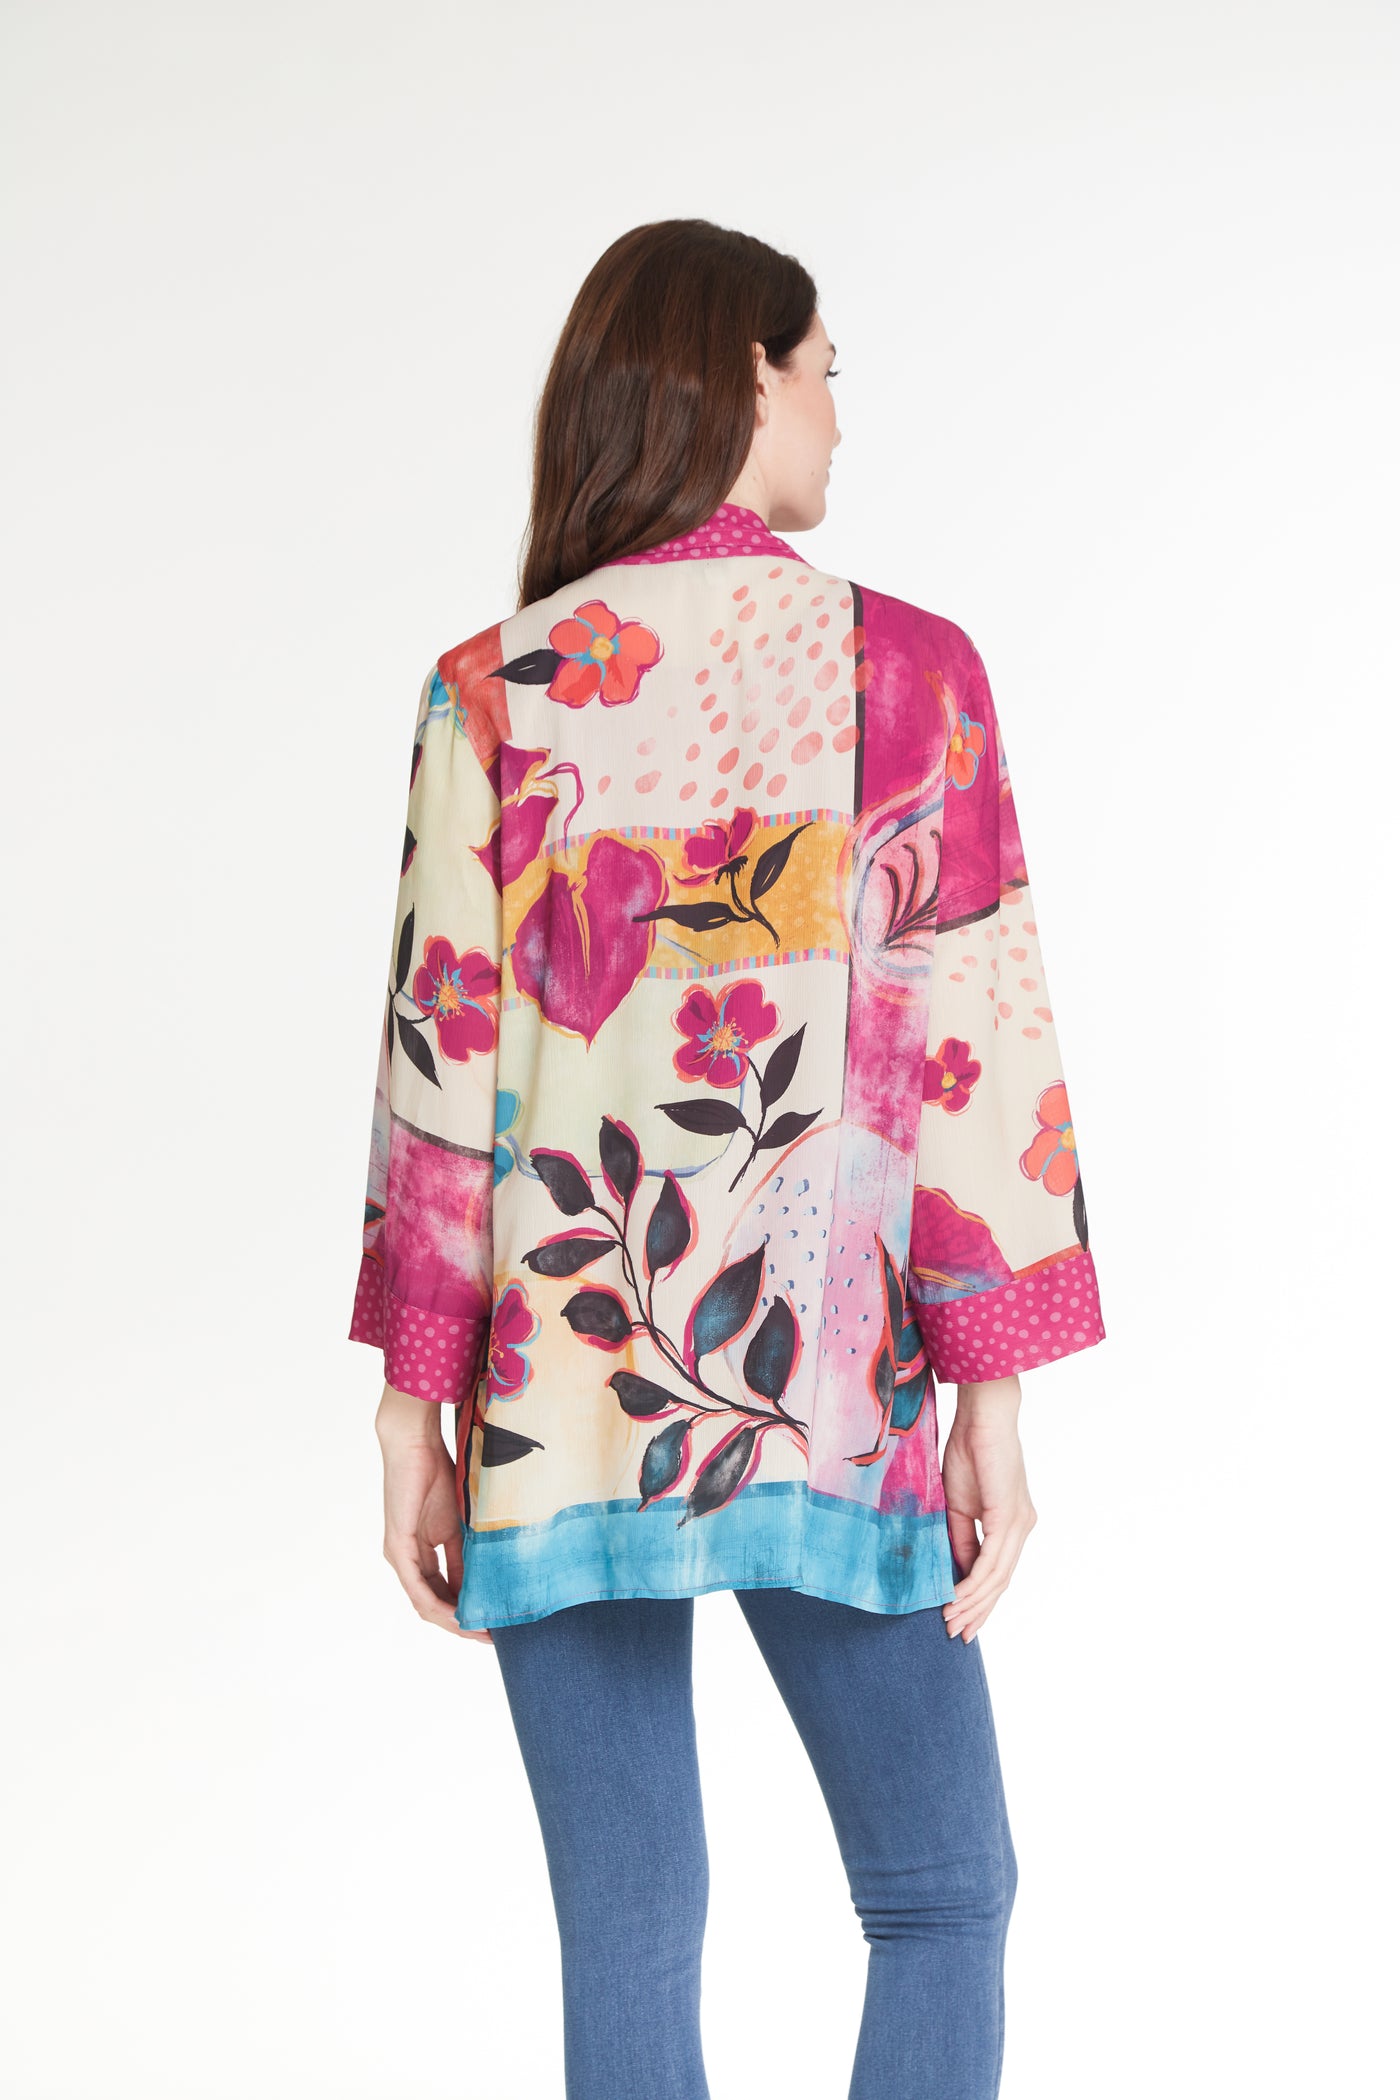 Kimono Sleeve Jacket - Women's - Multi